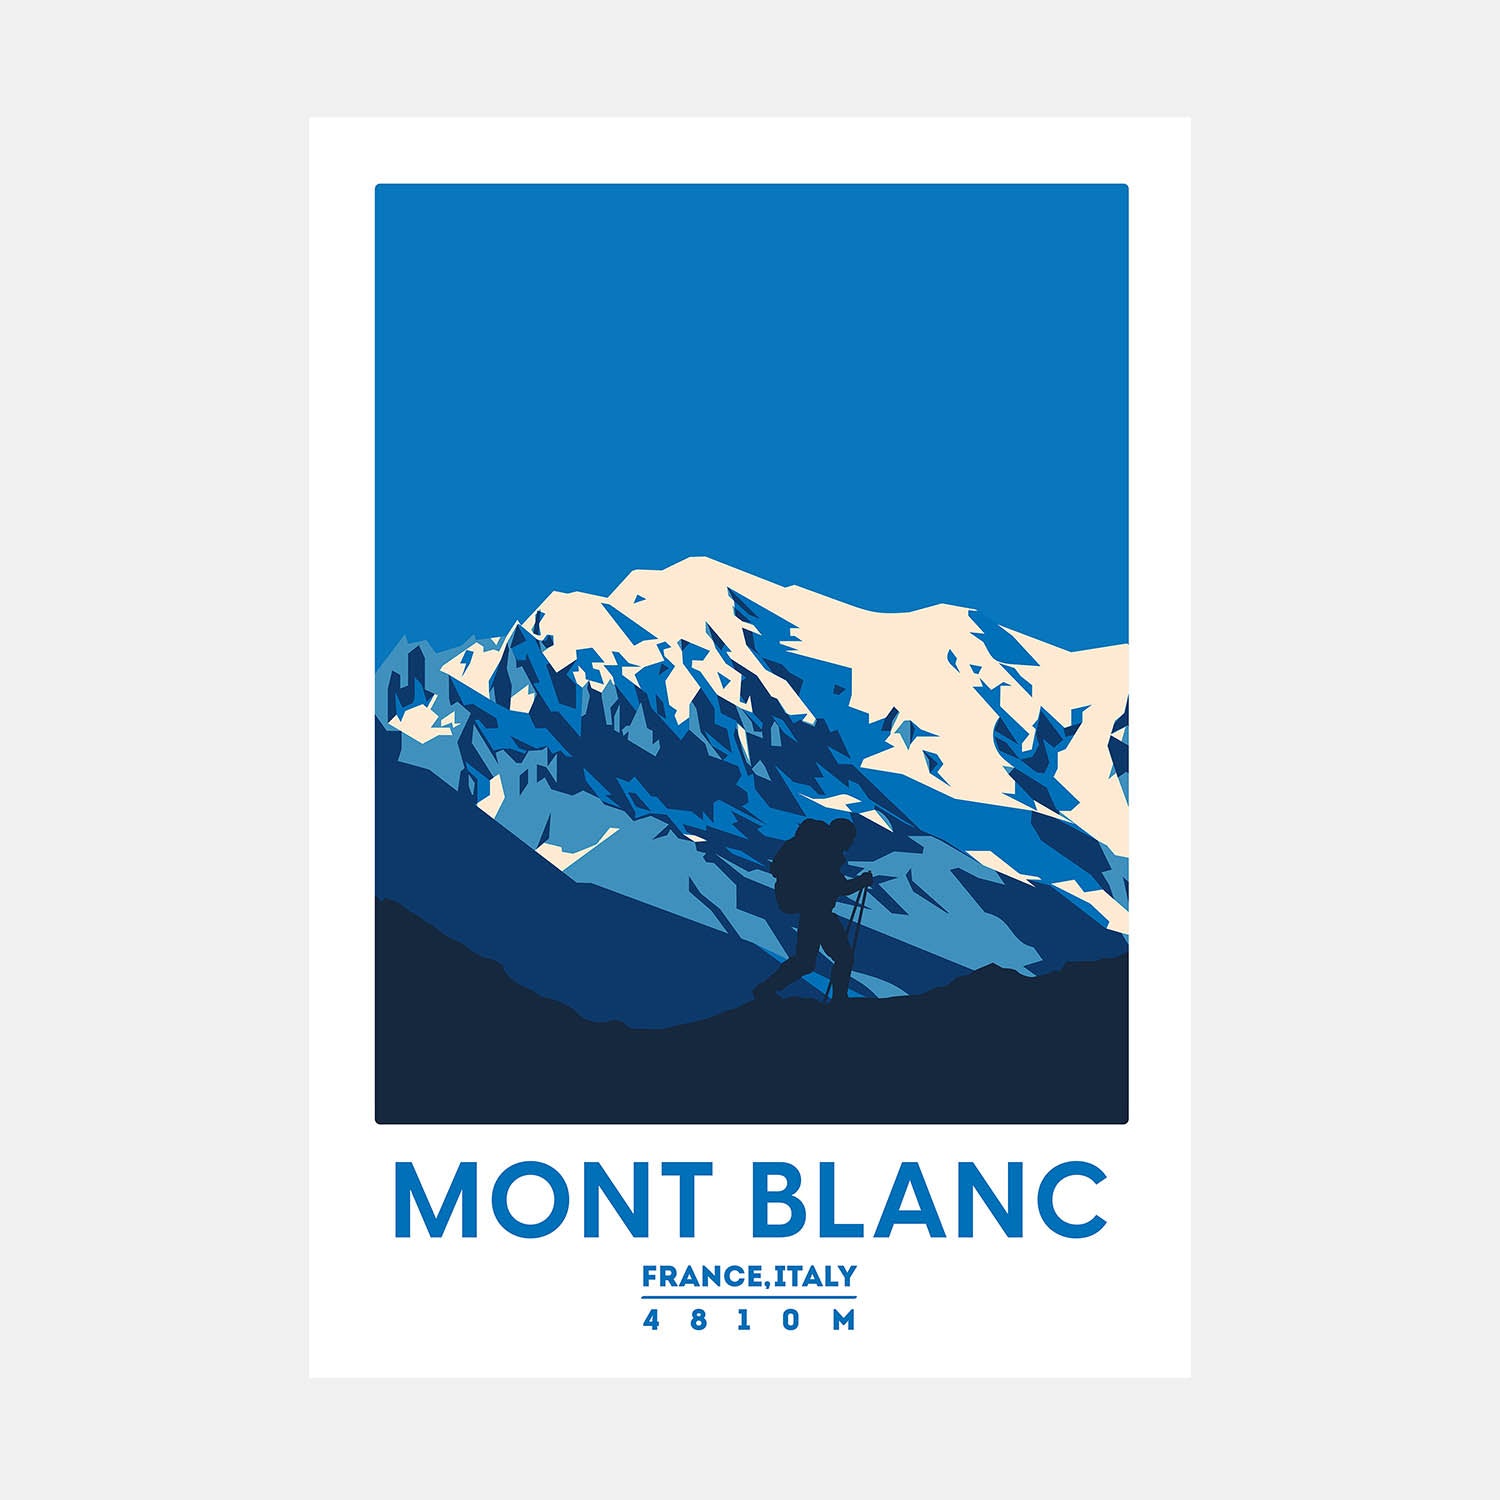 Majestic Mont Blanc: A Swiss Mountain Peak Art Print